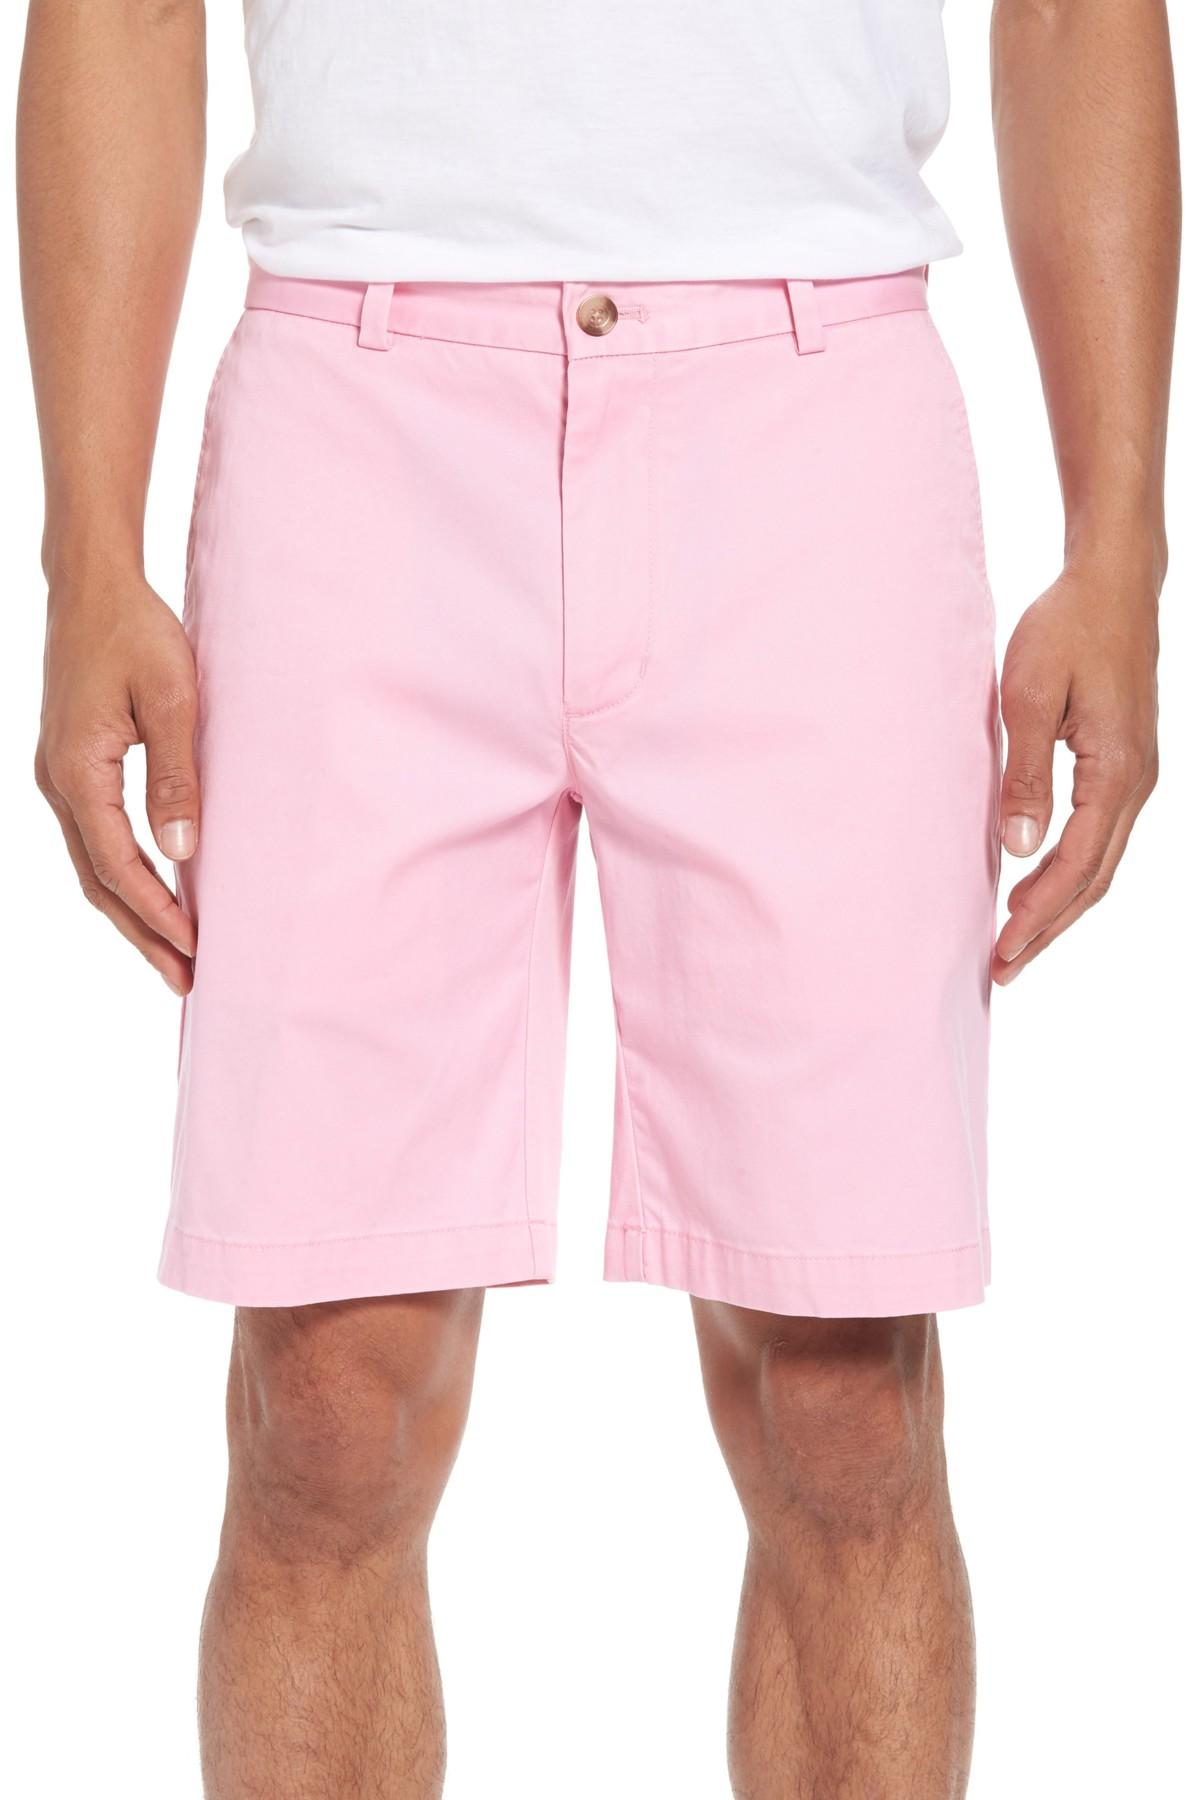 Vineyard Vines Cotton 9 Inch Stretch Breaker Shorts in Pink for Men - Lyst